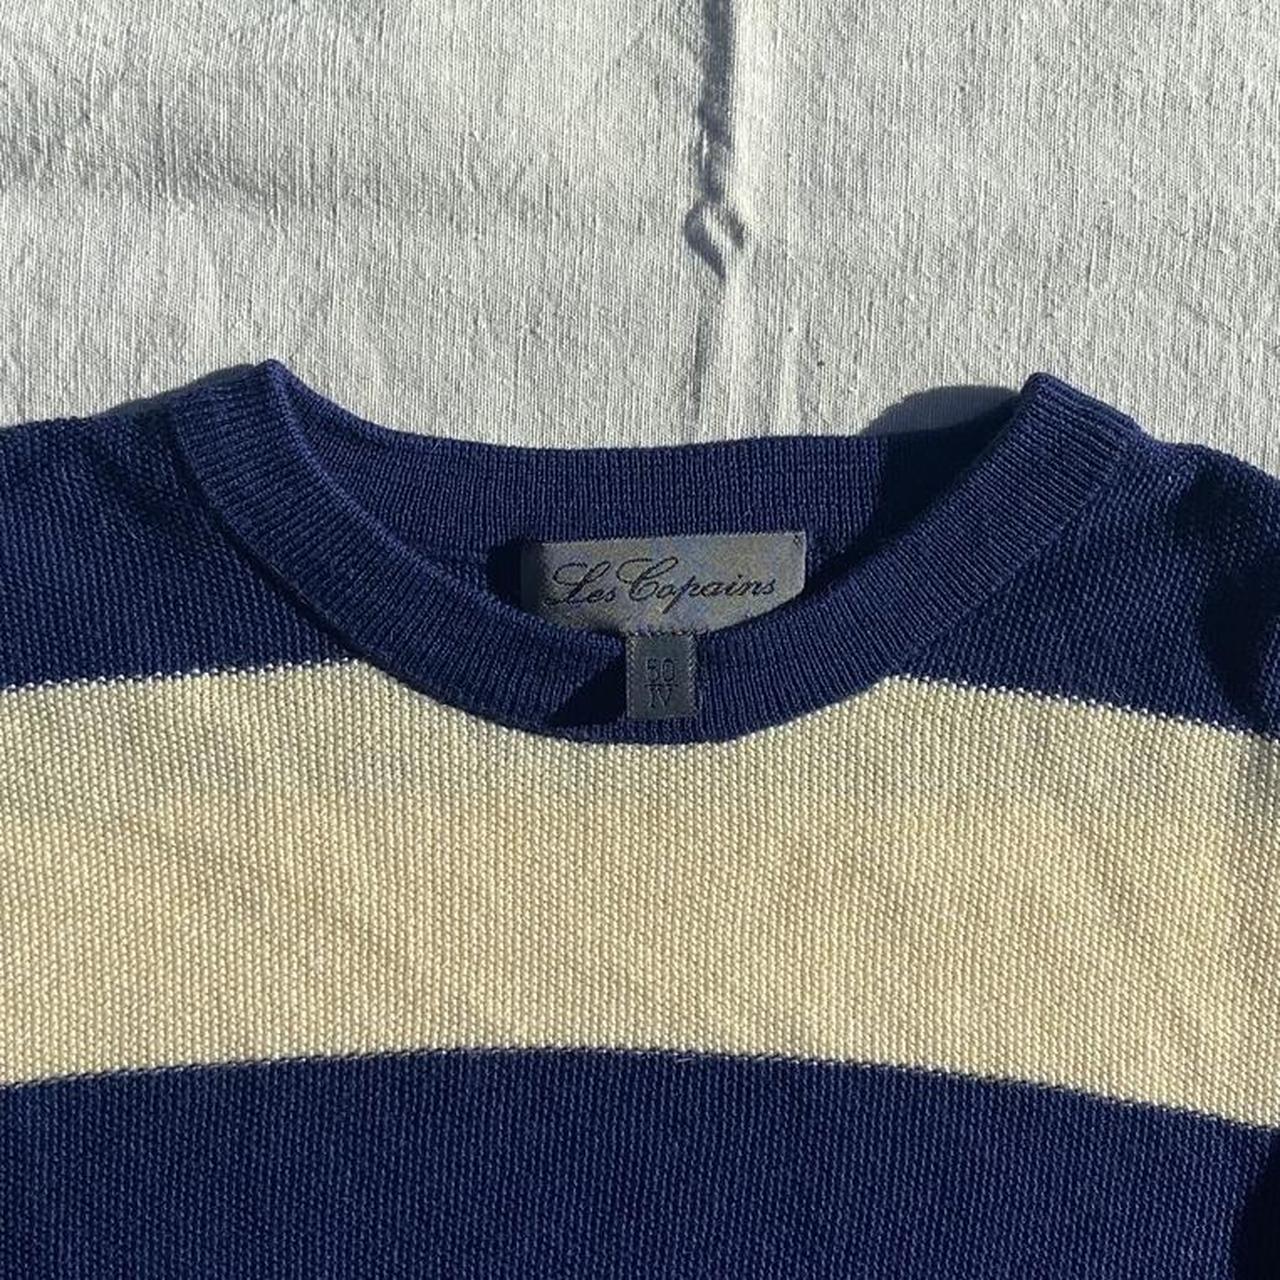 Les Copains vintage striped jumper 100% wool but... - Depop